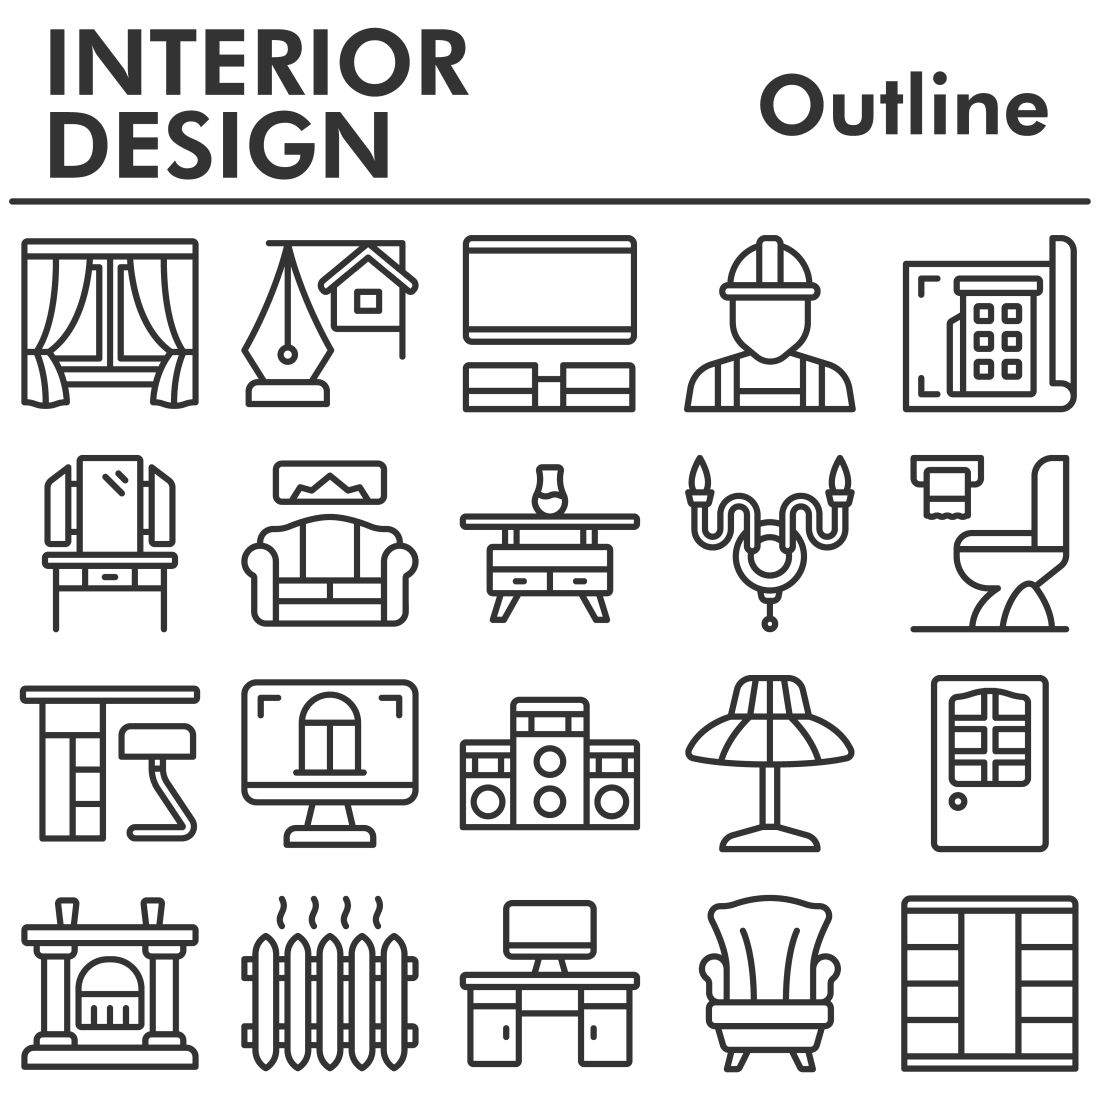 Interior design icons set cover image.